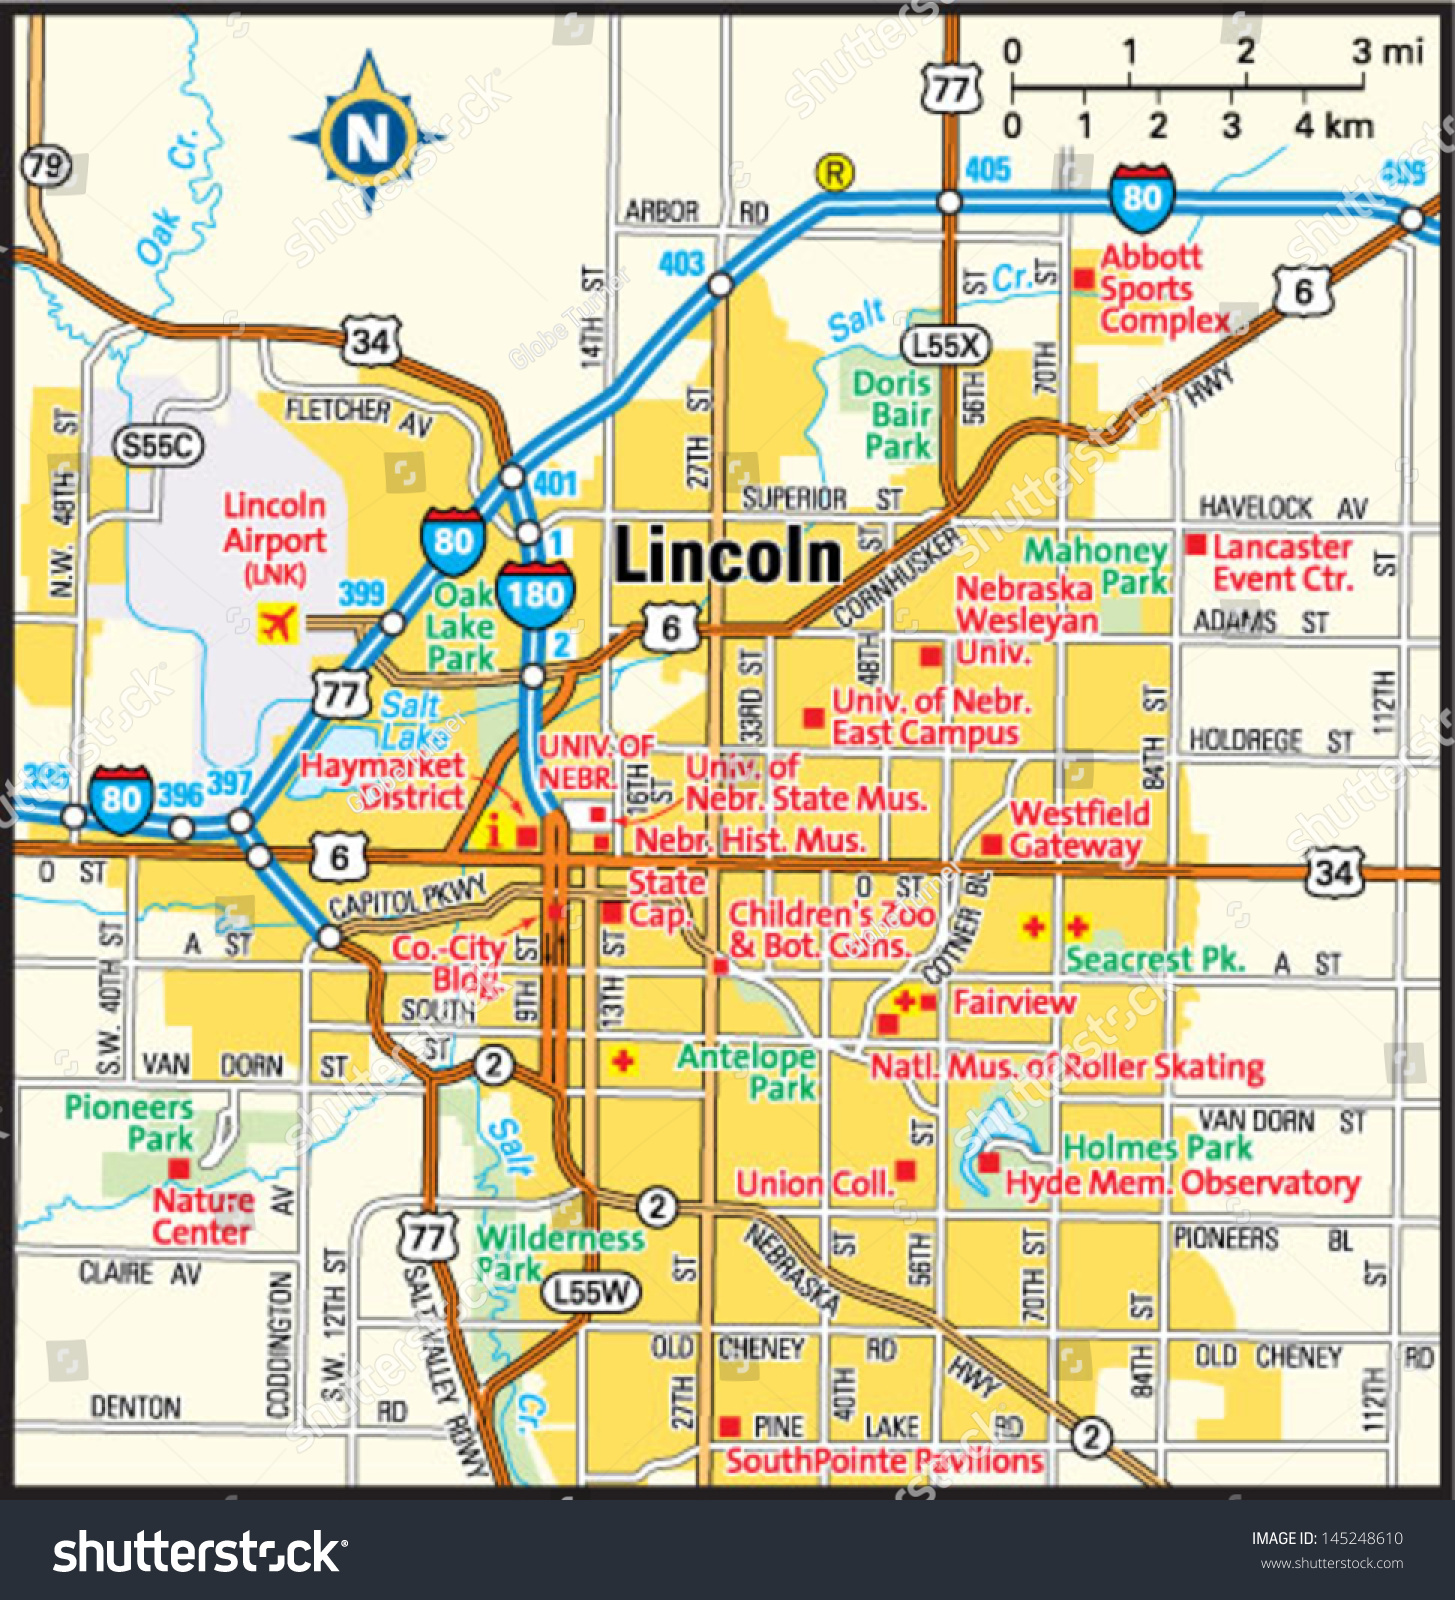 lincoln-nebraska-area-map-145248610-shutterstock